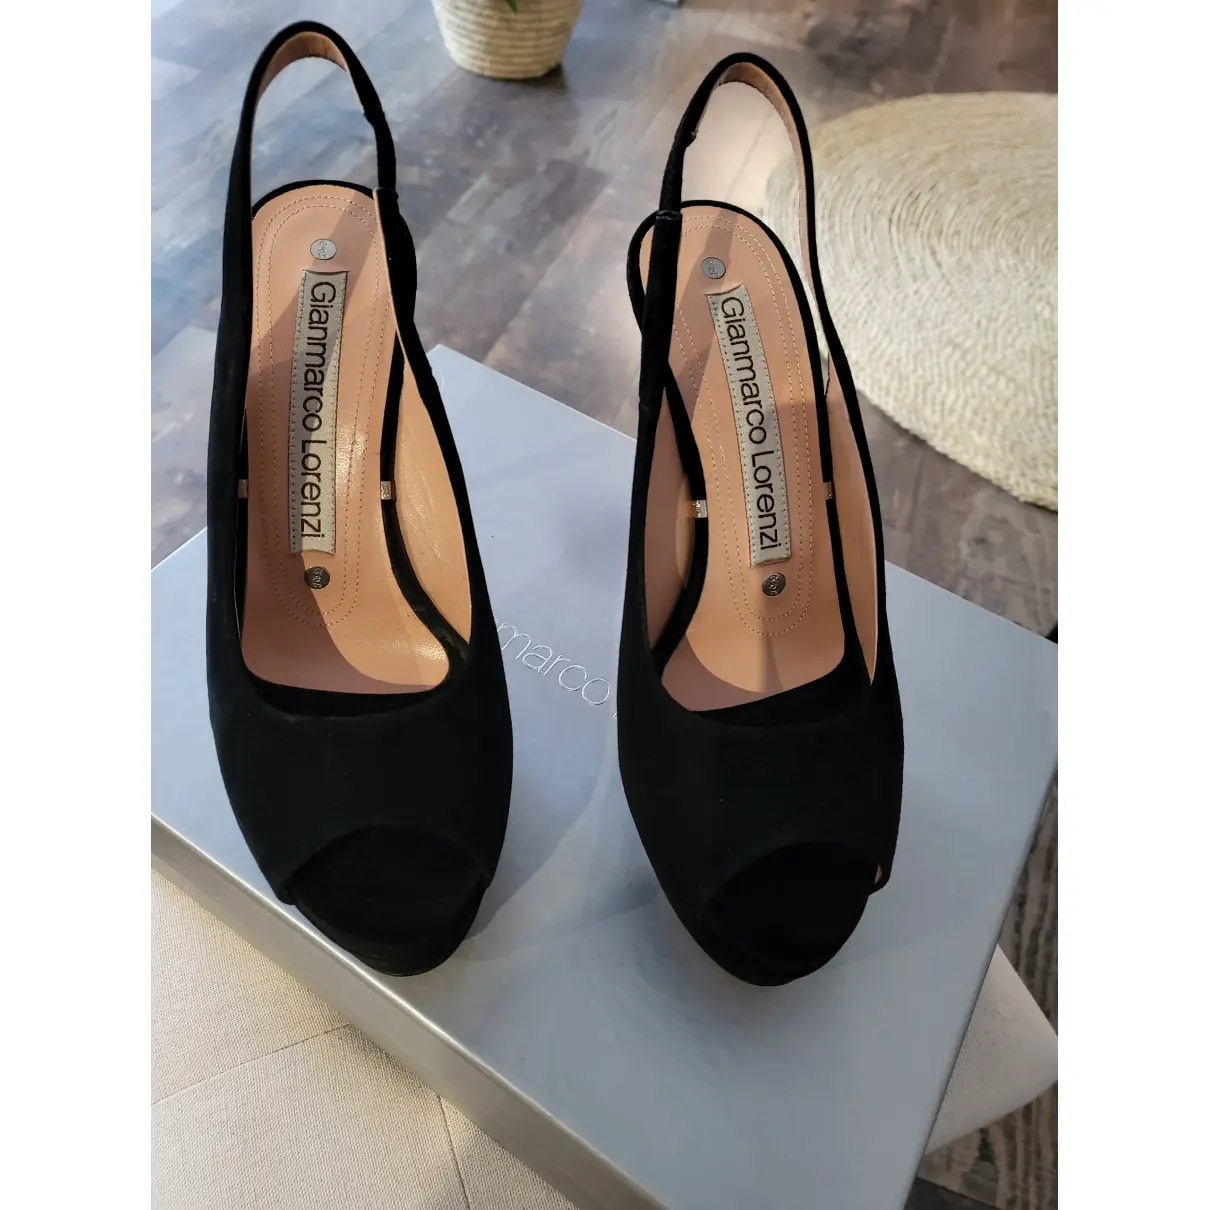 Buy Gianmarco Lorenzi Sandals online